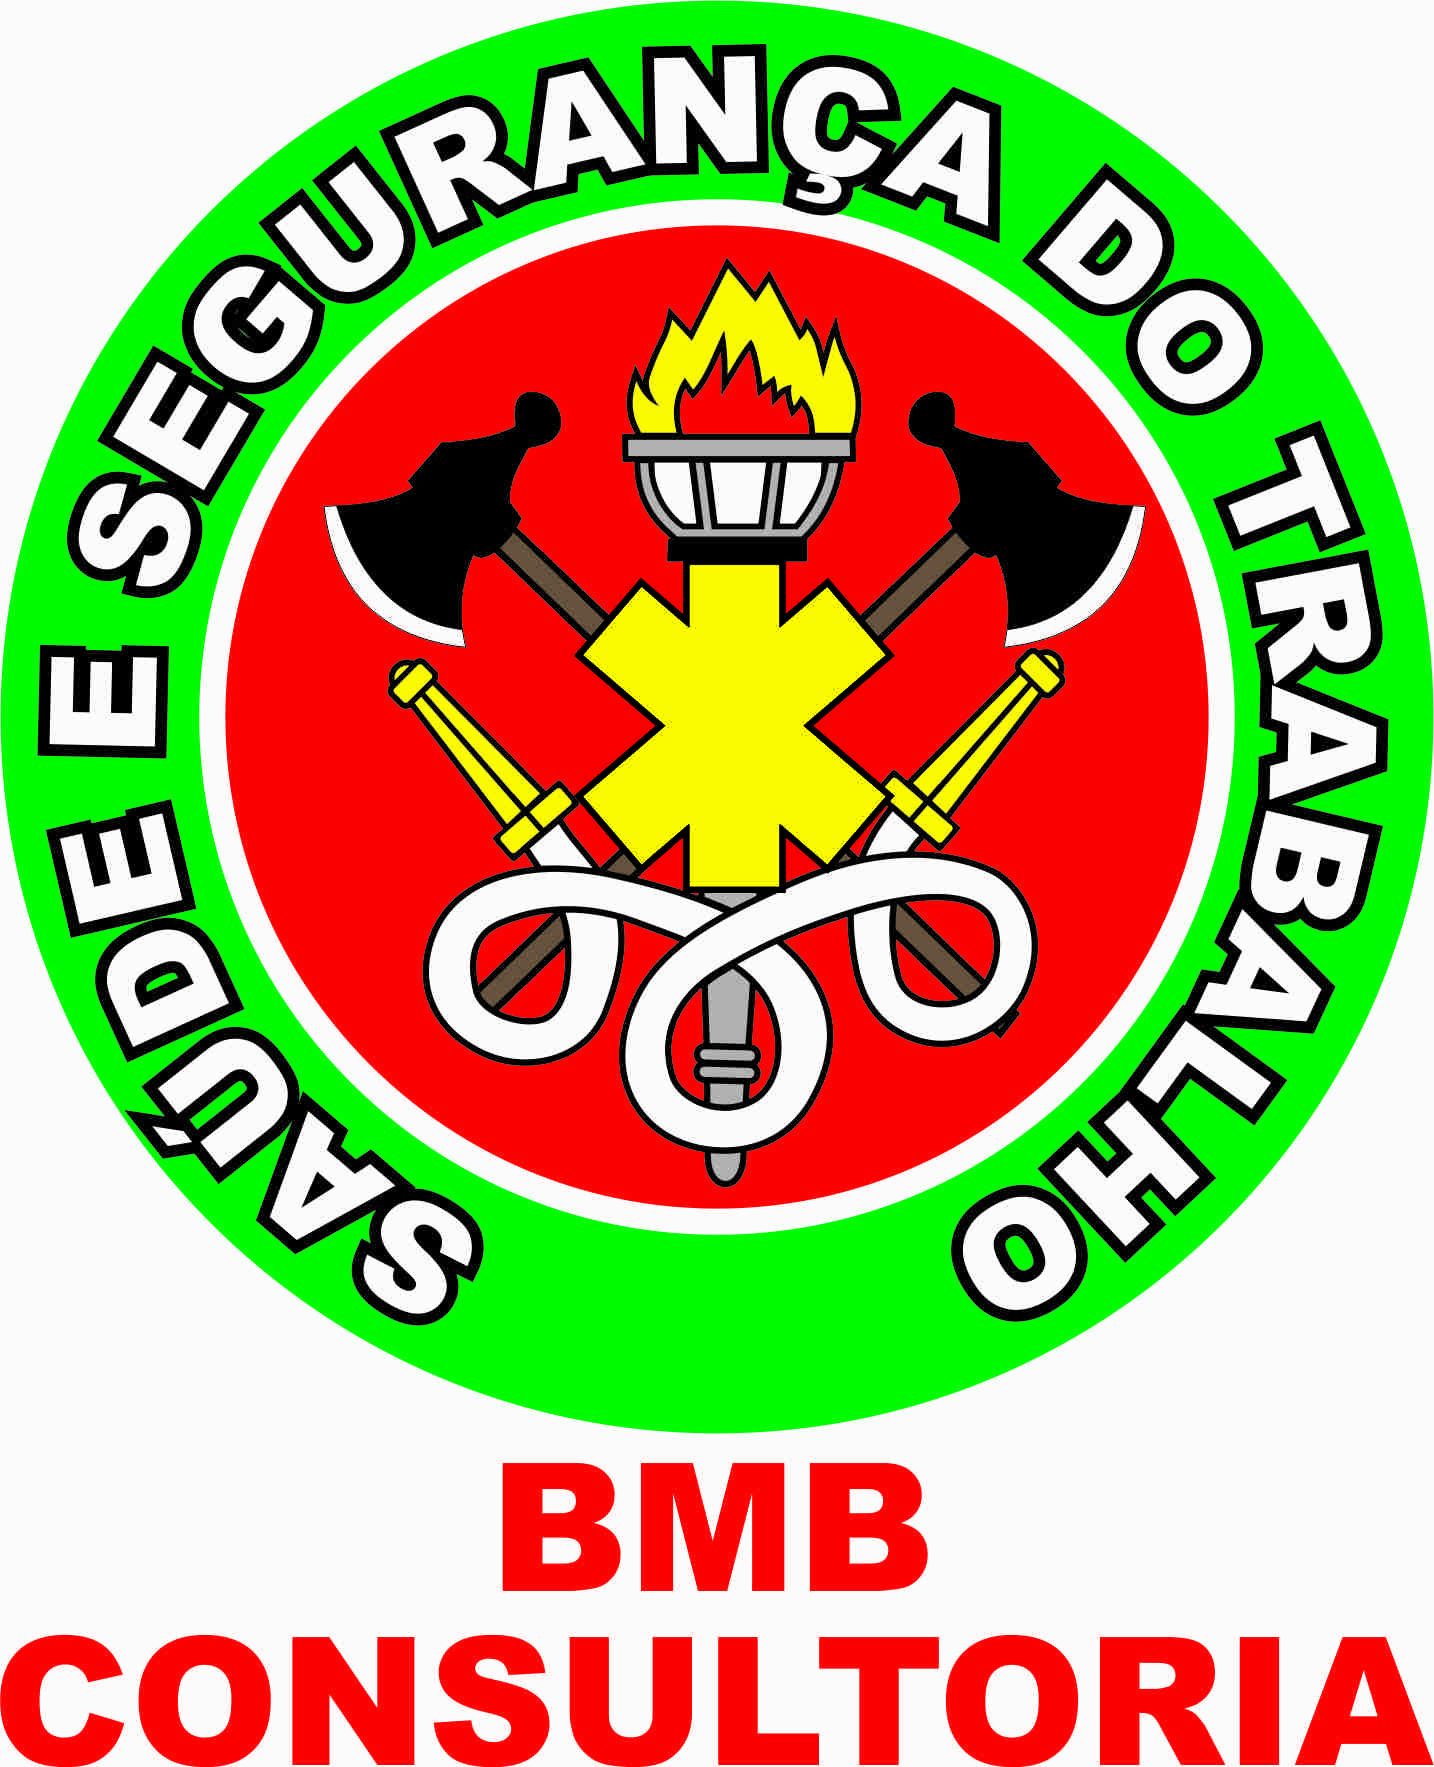 BMB Consultoria